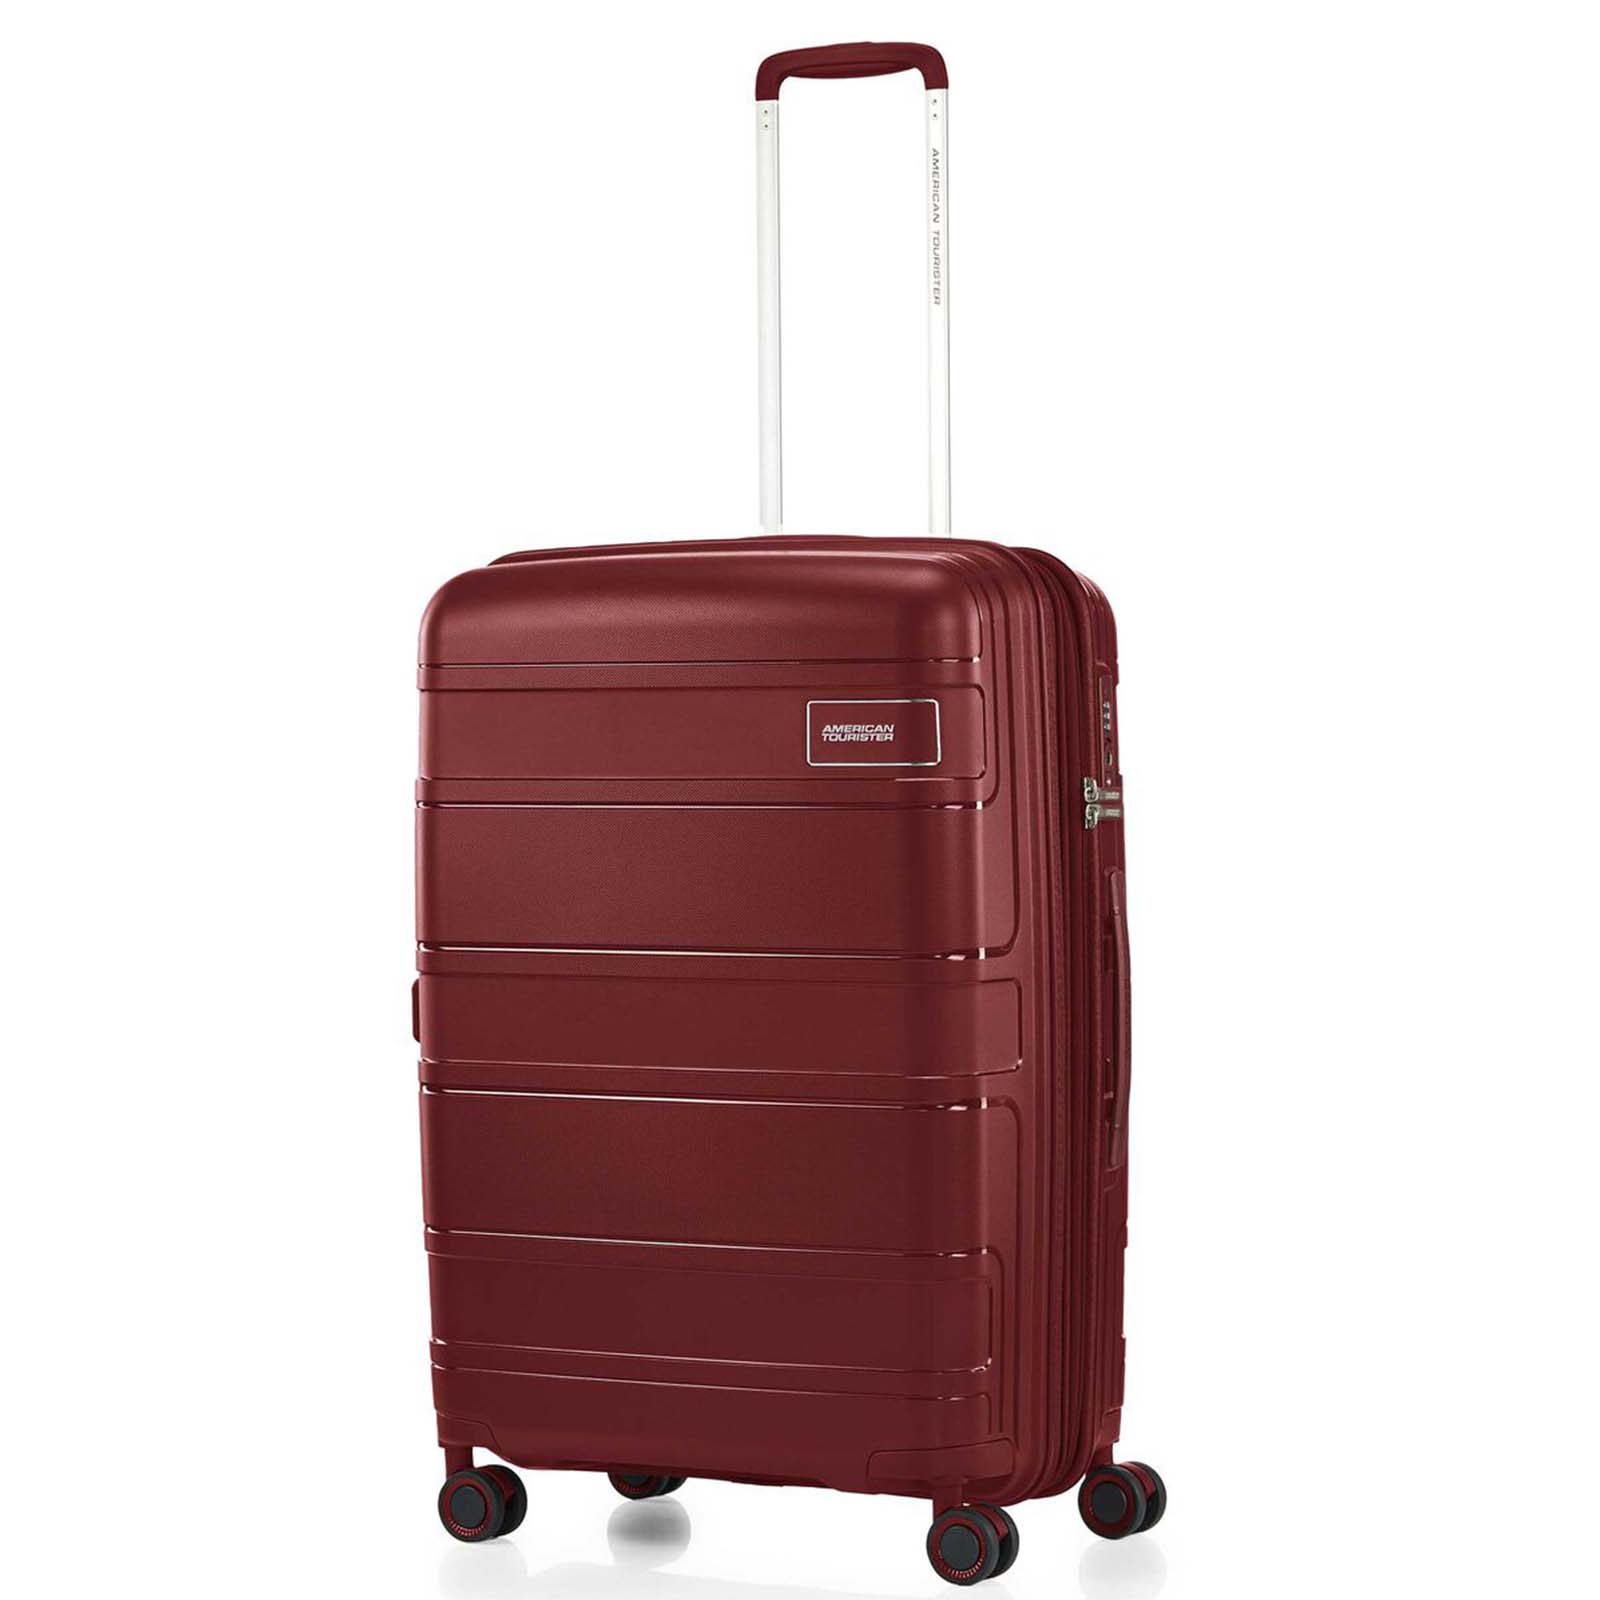 American-Tourister-Light-Max-69cm-Suitcase-Dahlia-Side-Angle